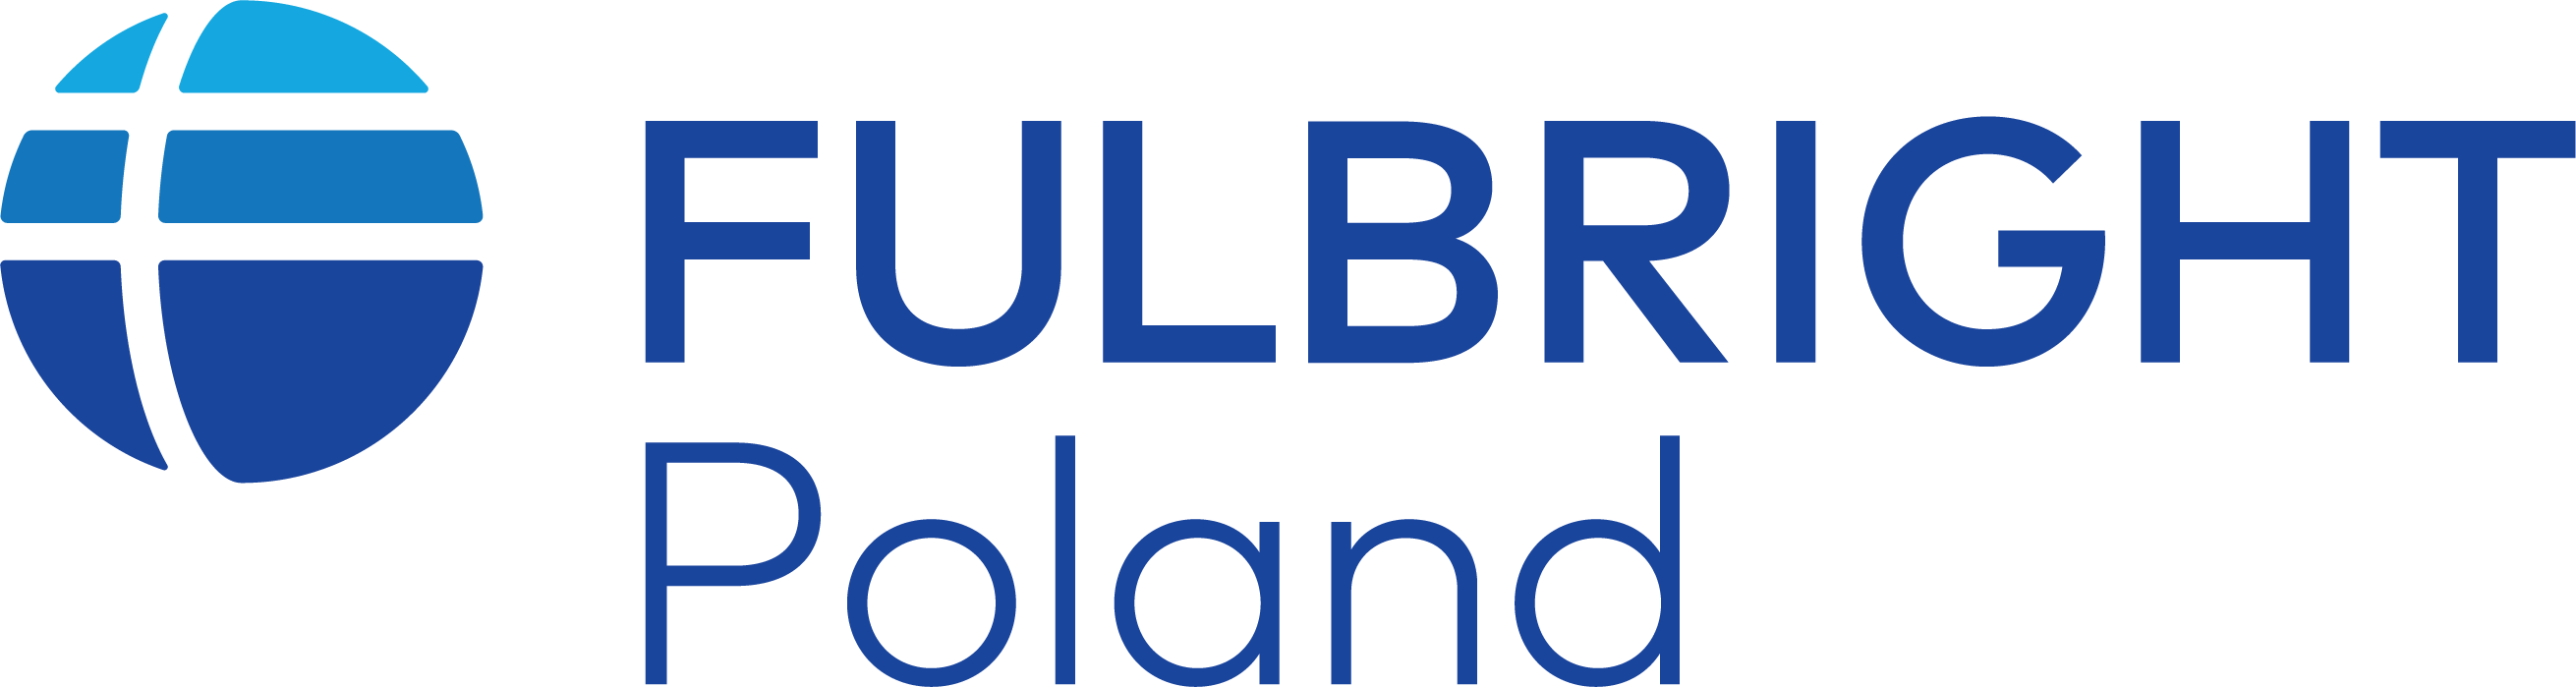 Fulbright Poland logo blue